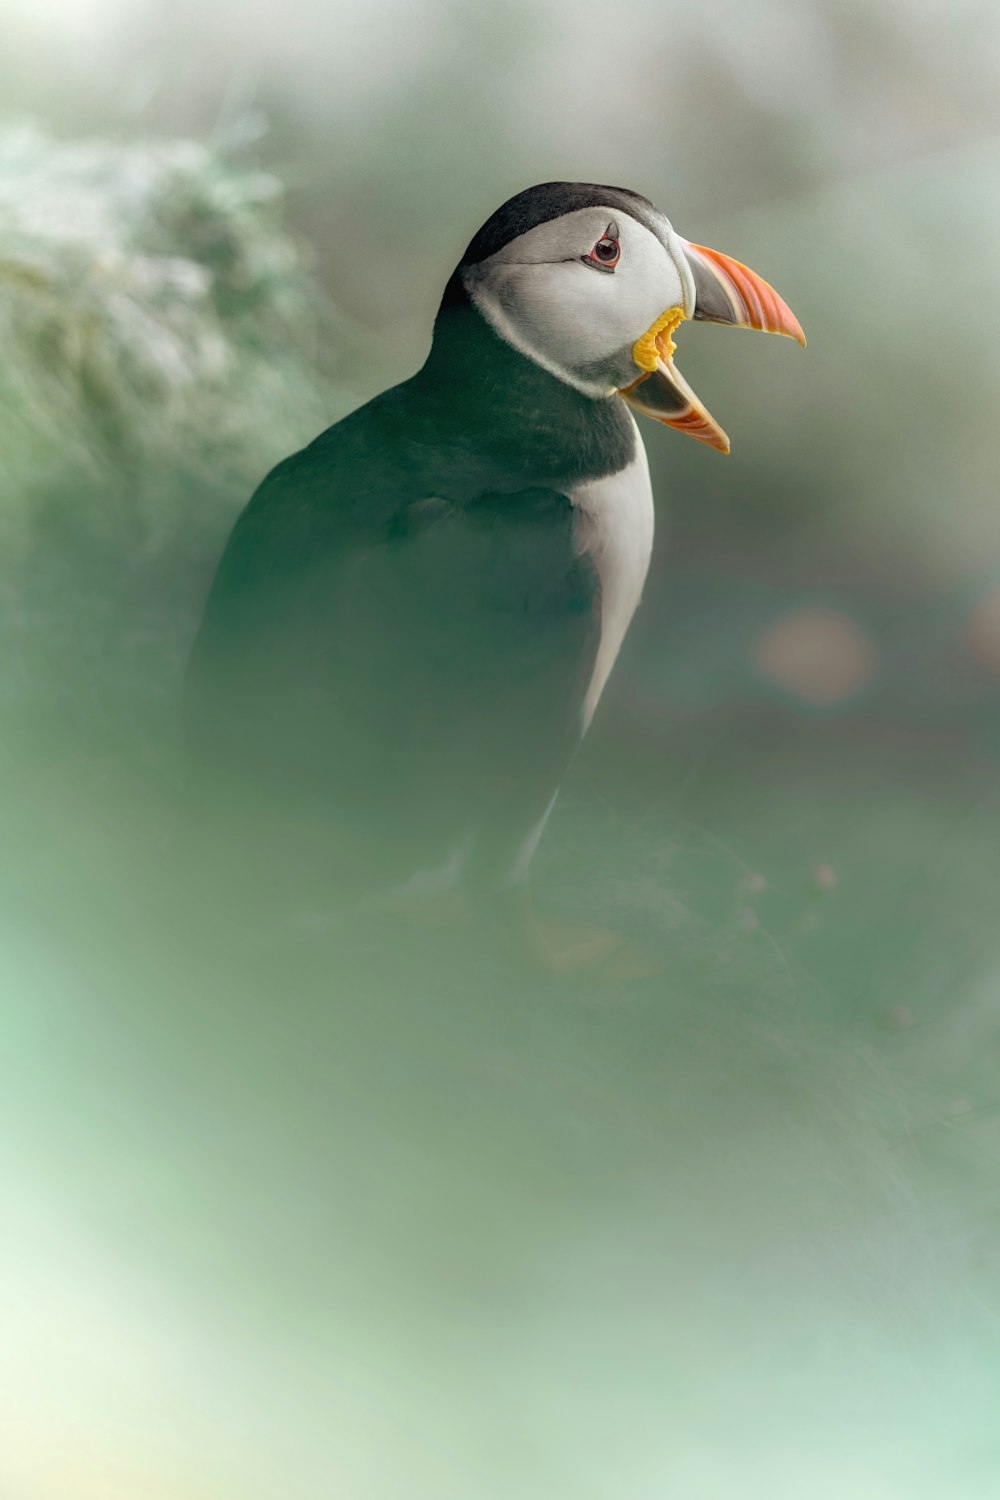 a small bird with a long beak and an orange beak